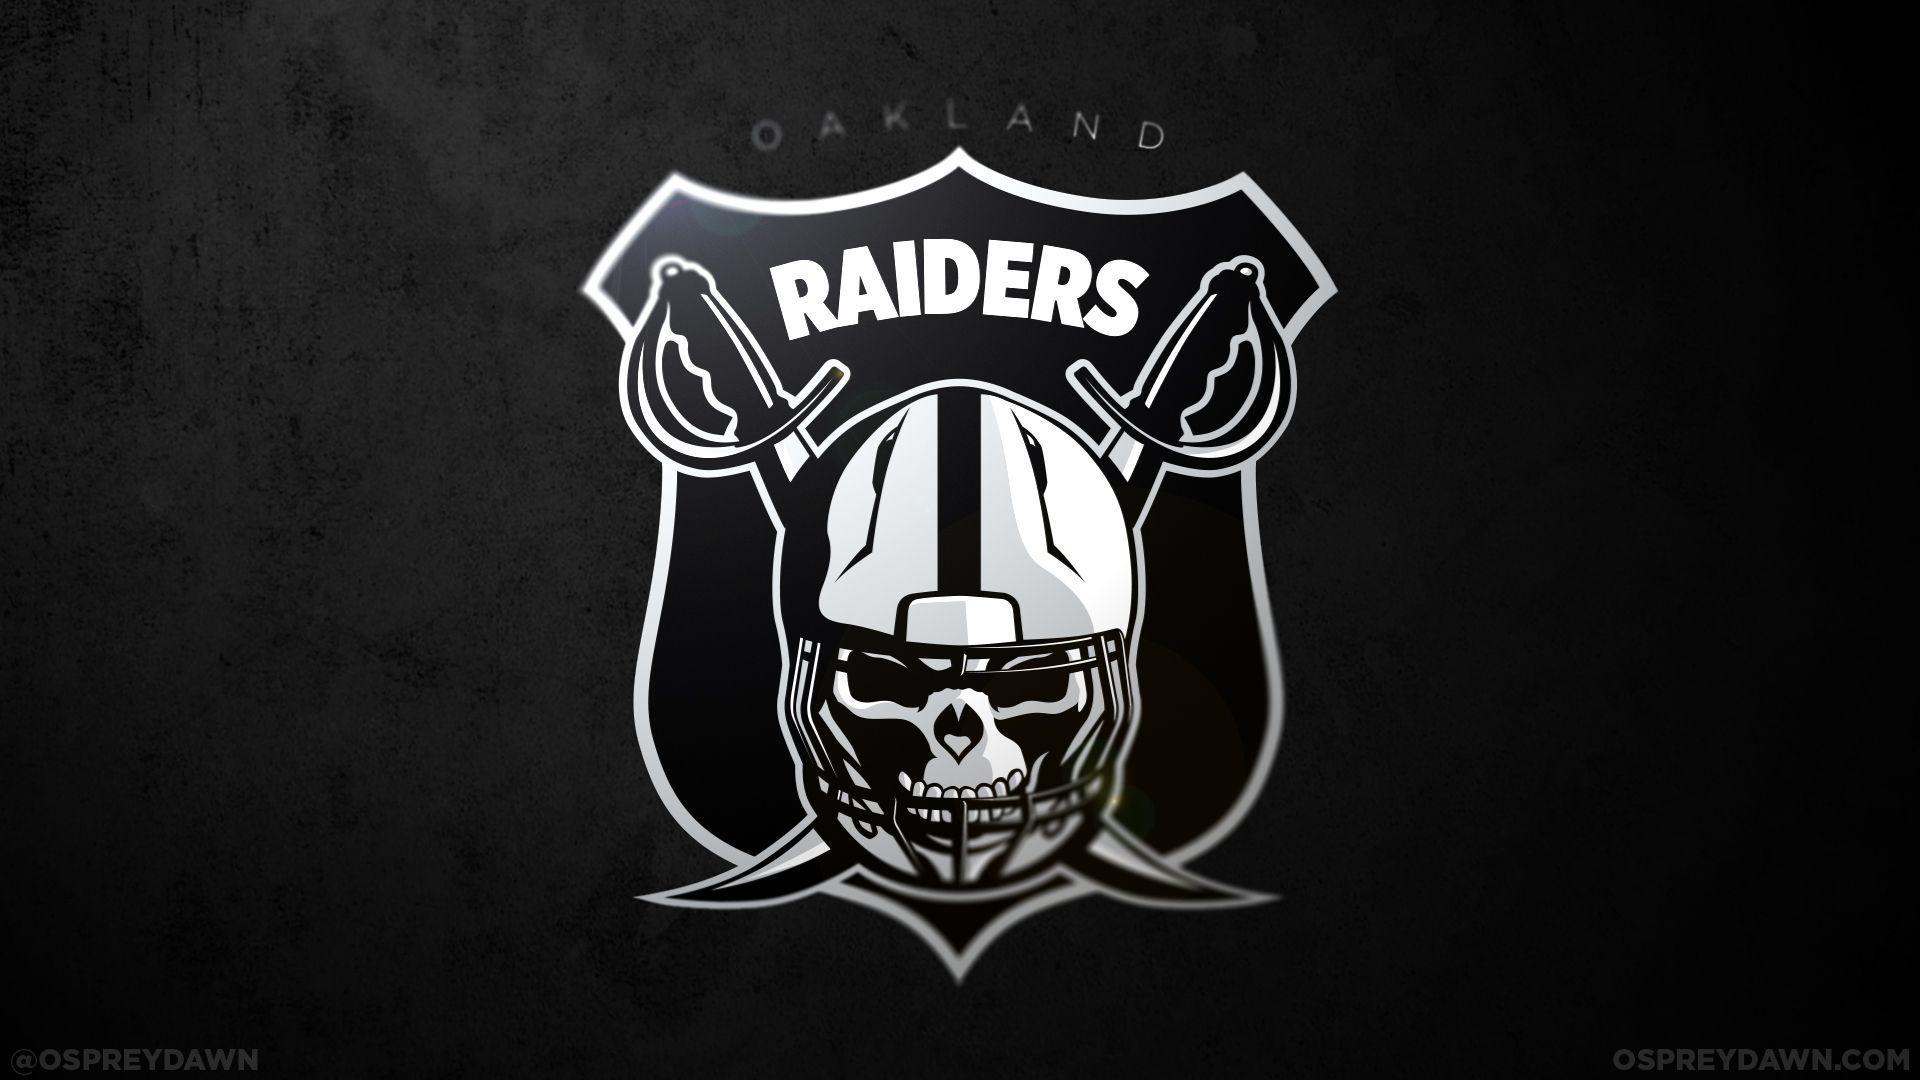 Oakland Raiders Wallpapers - Wallpaper Cave